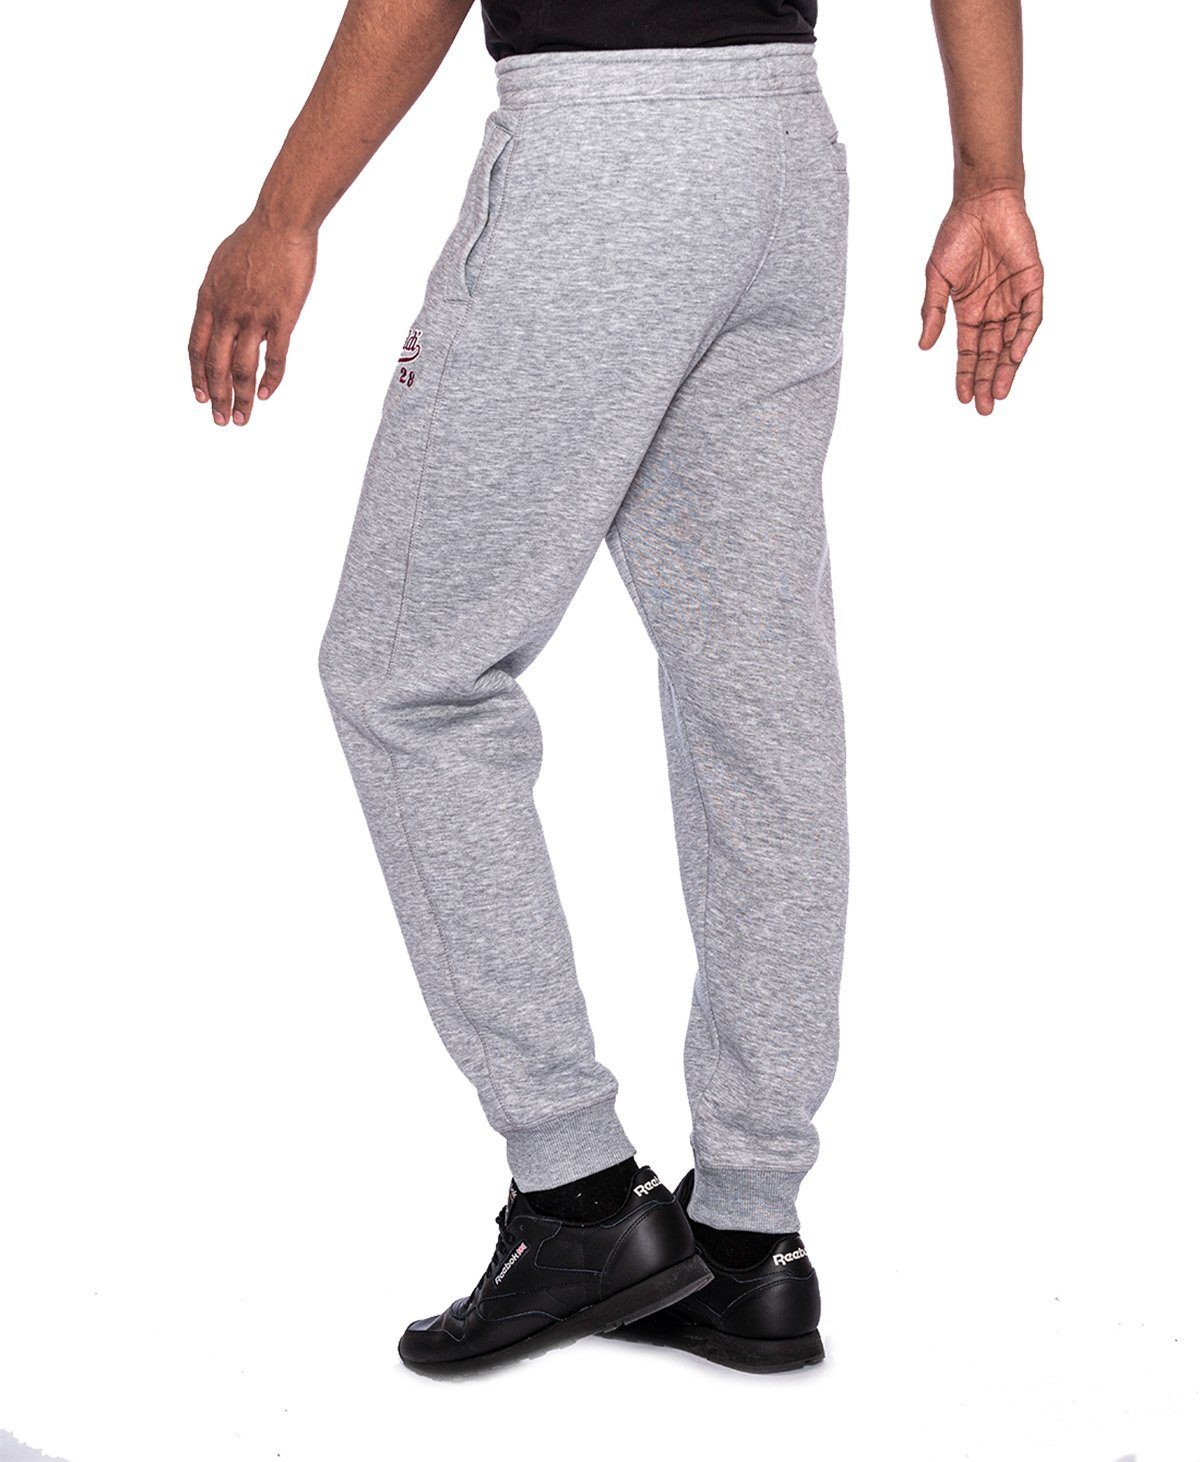 PICALDI Jeans Jogginghose Grey Classical Trainingshose, Sweatpant Freizeithose